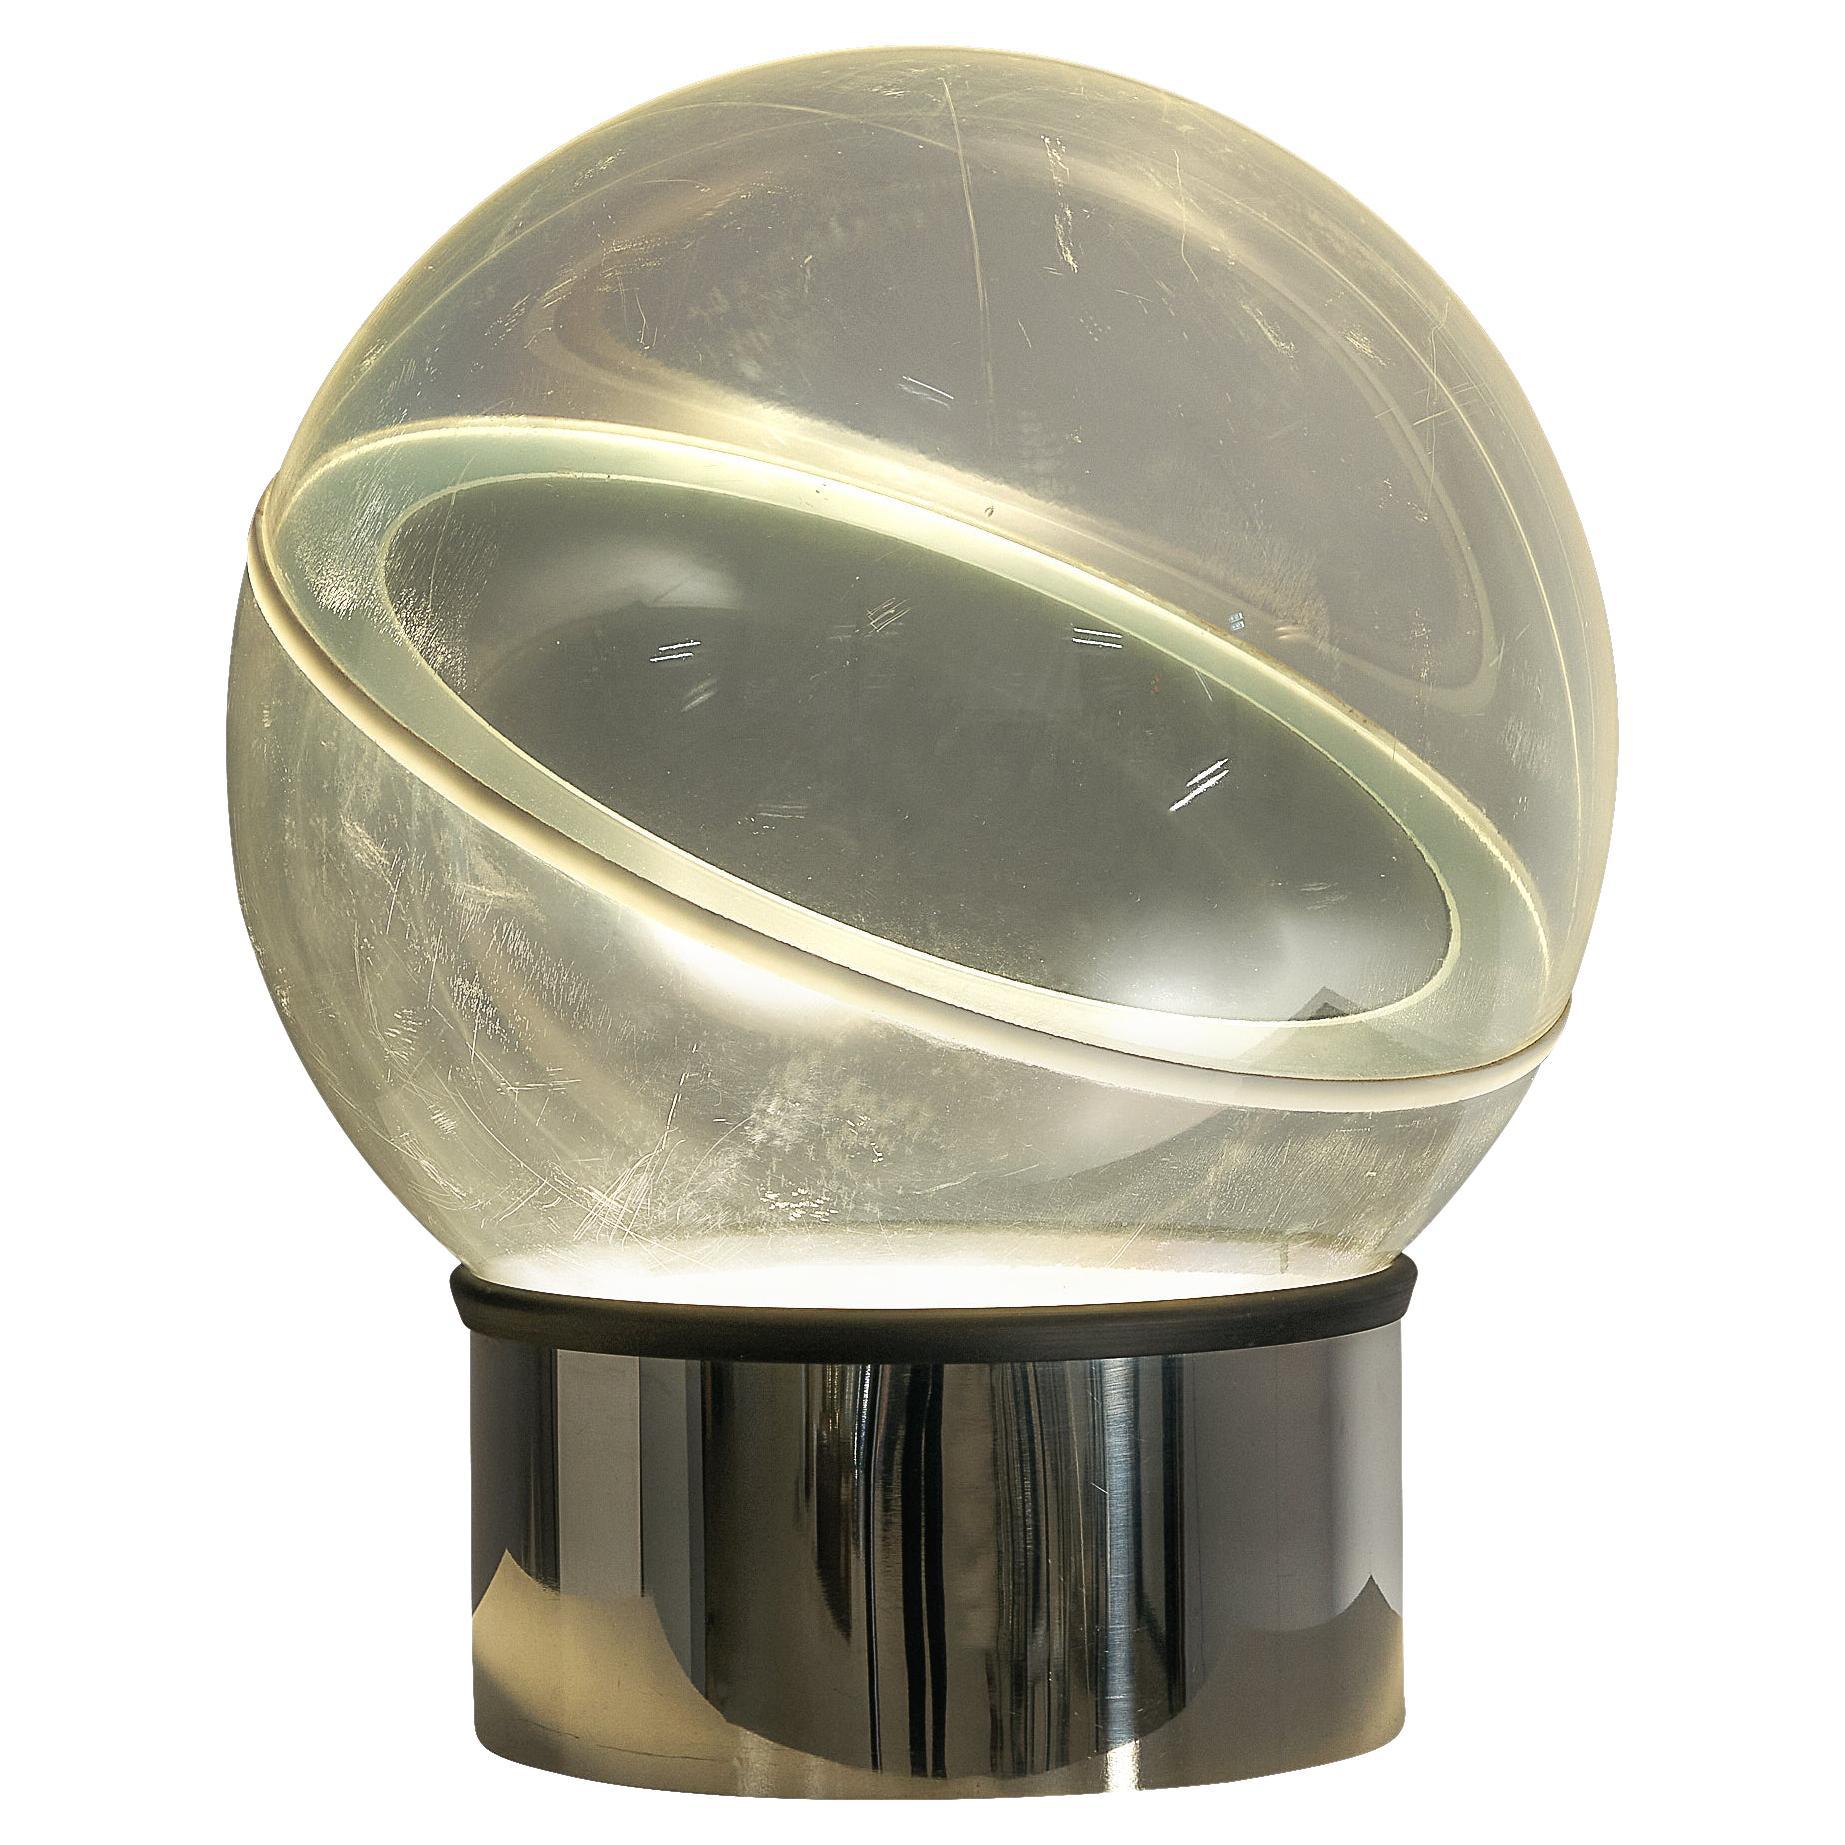 Filippo Panseca for Kartell Table Lamp Model '4044' in Chrome and Neon For Sale